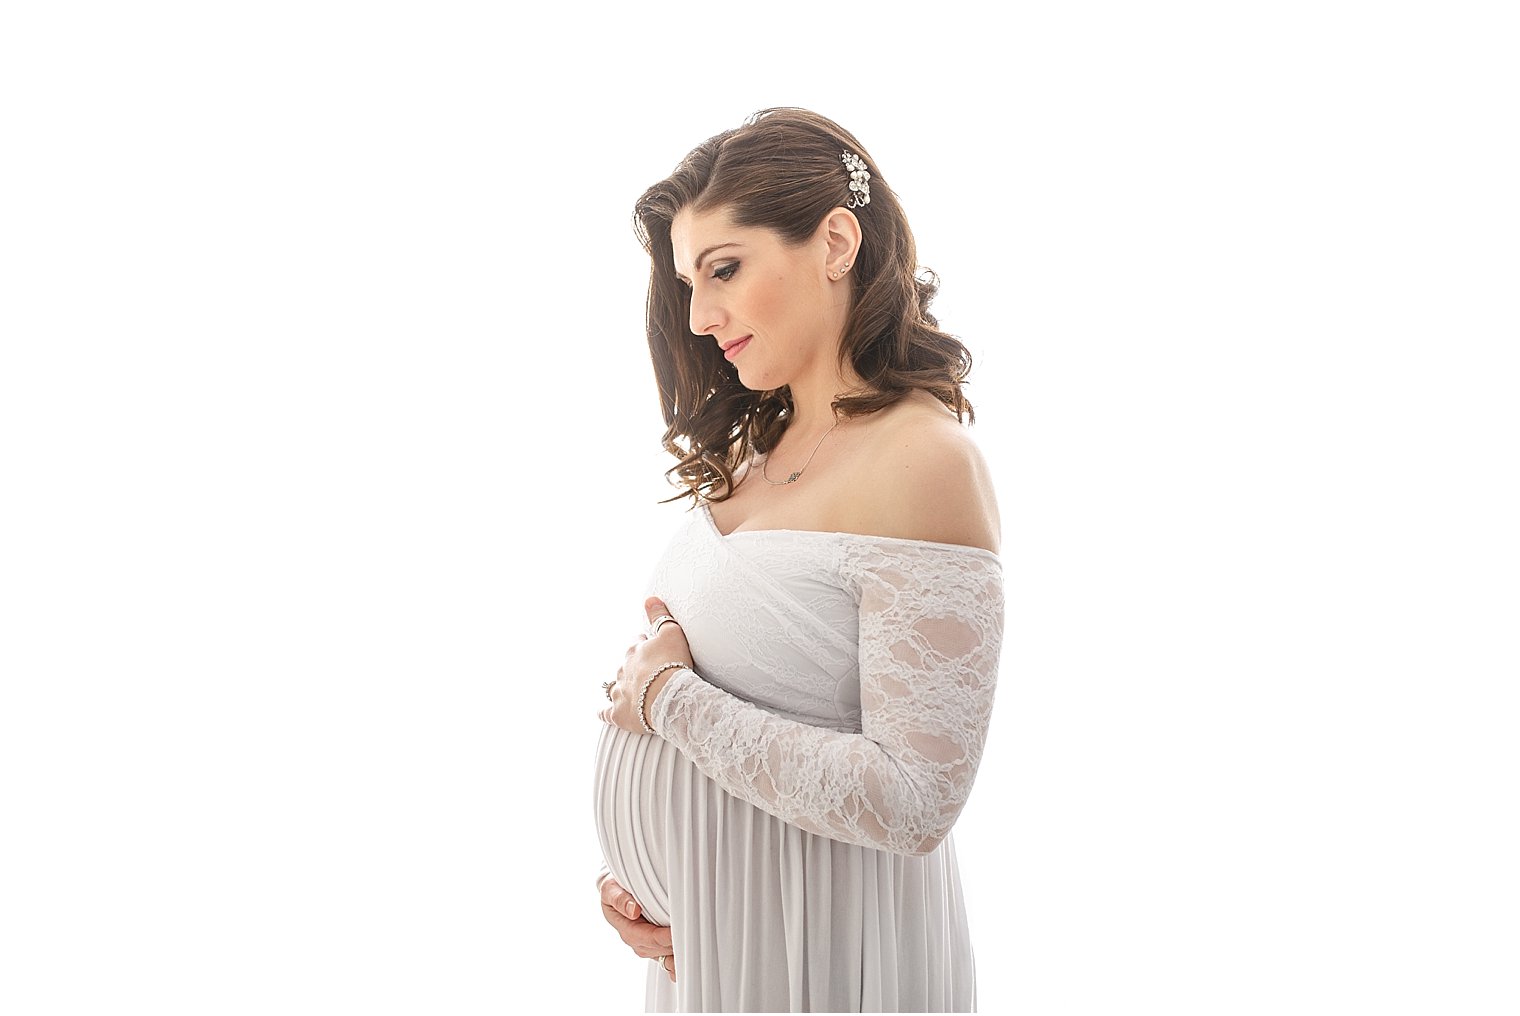 Backlit maternity photo